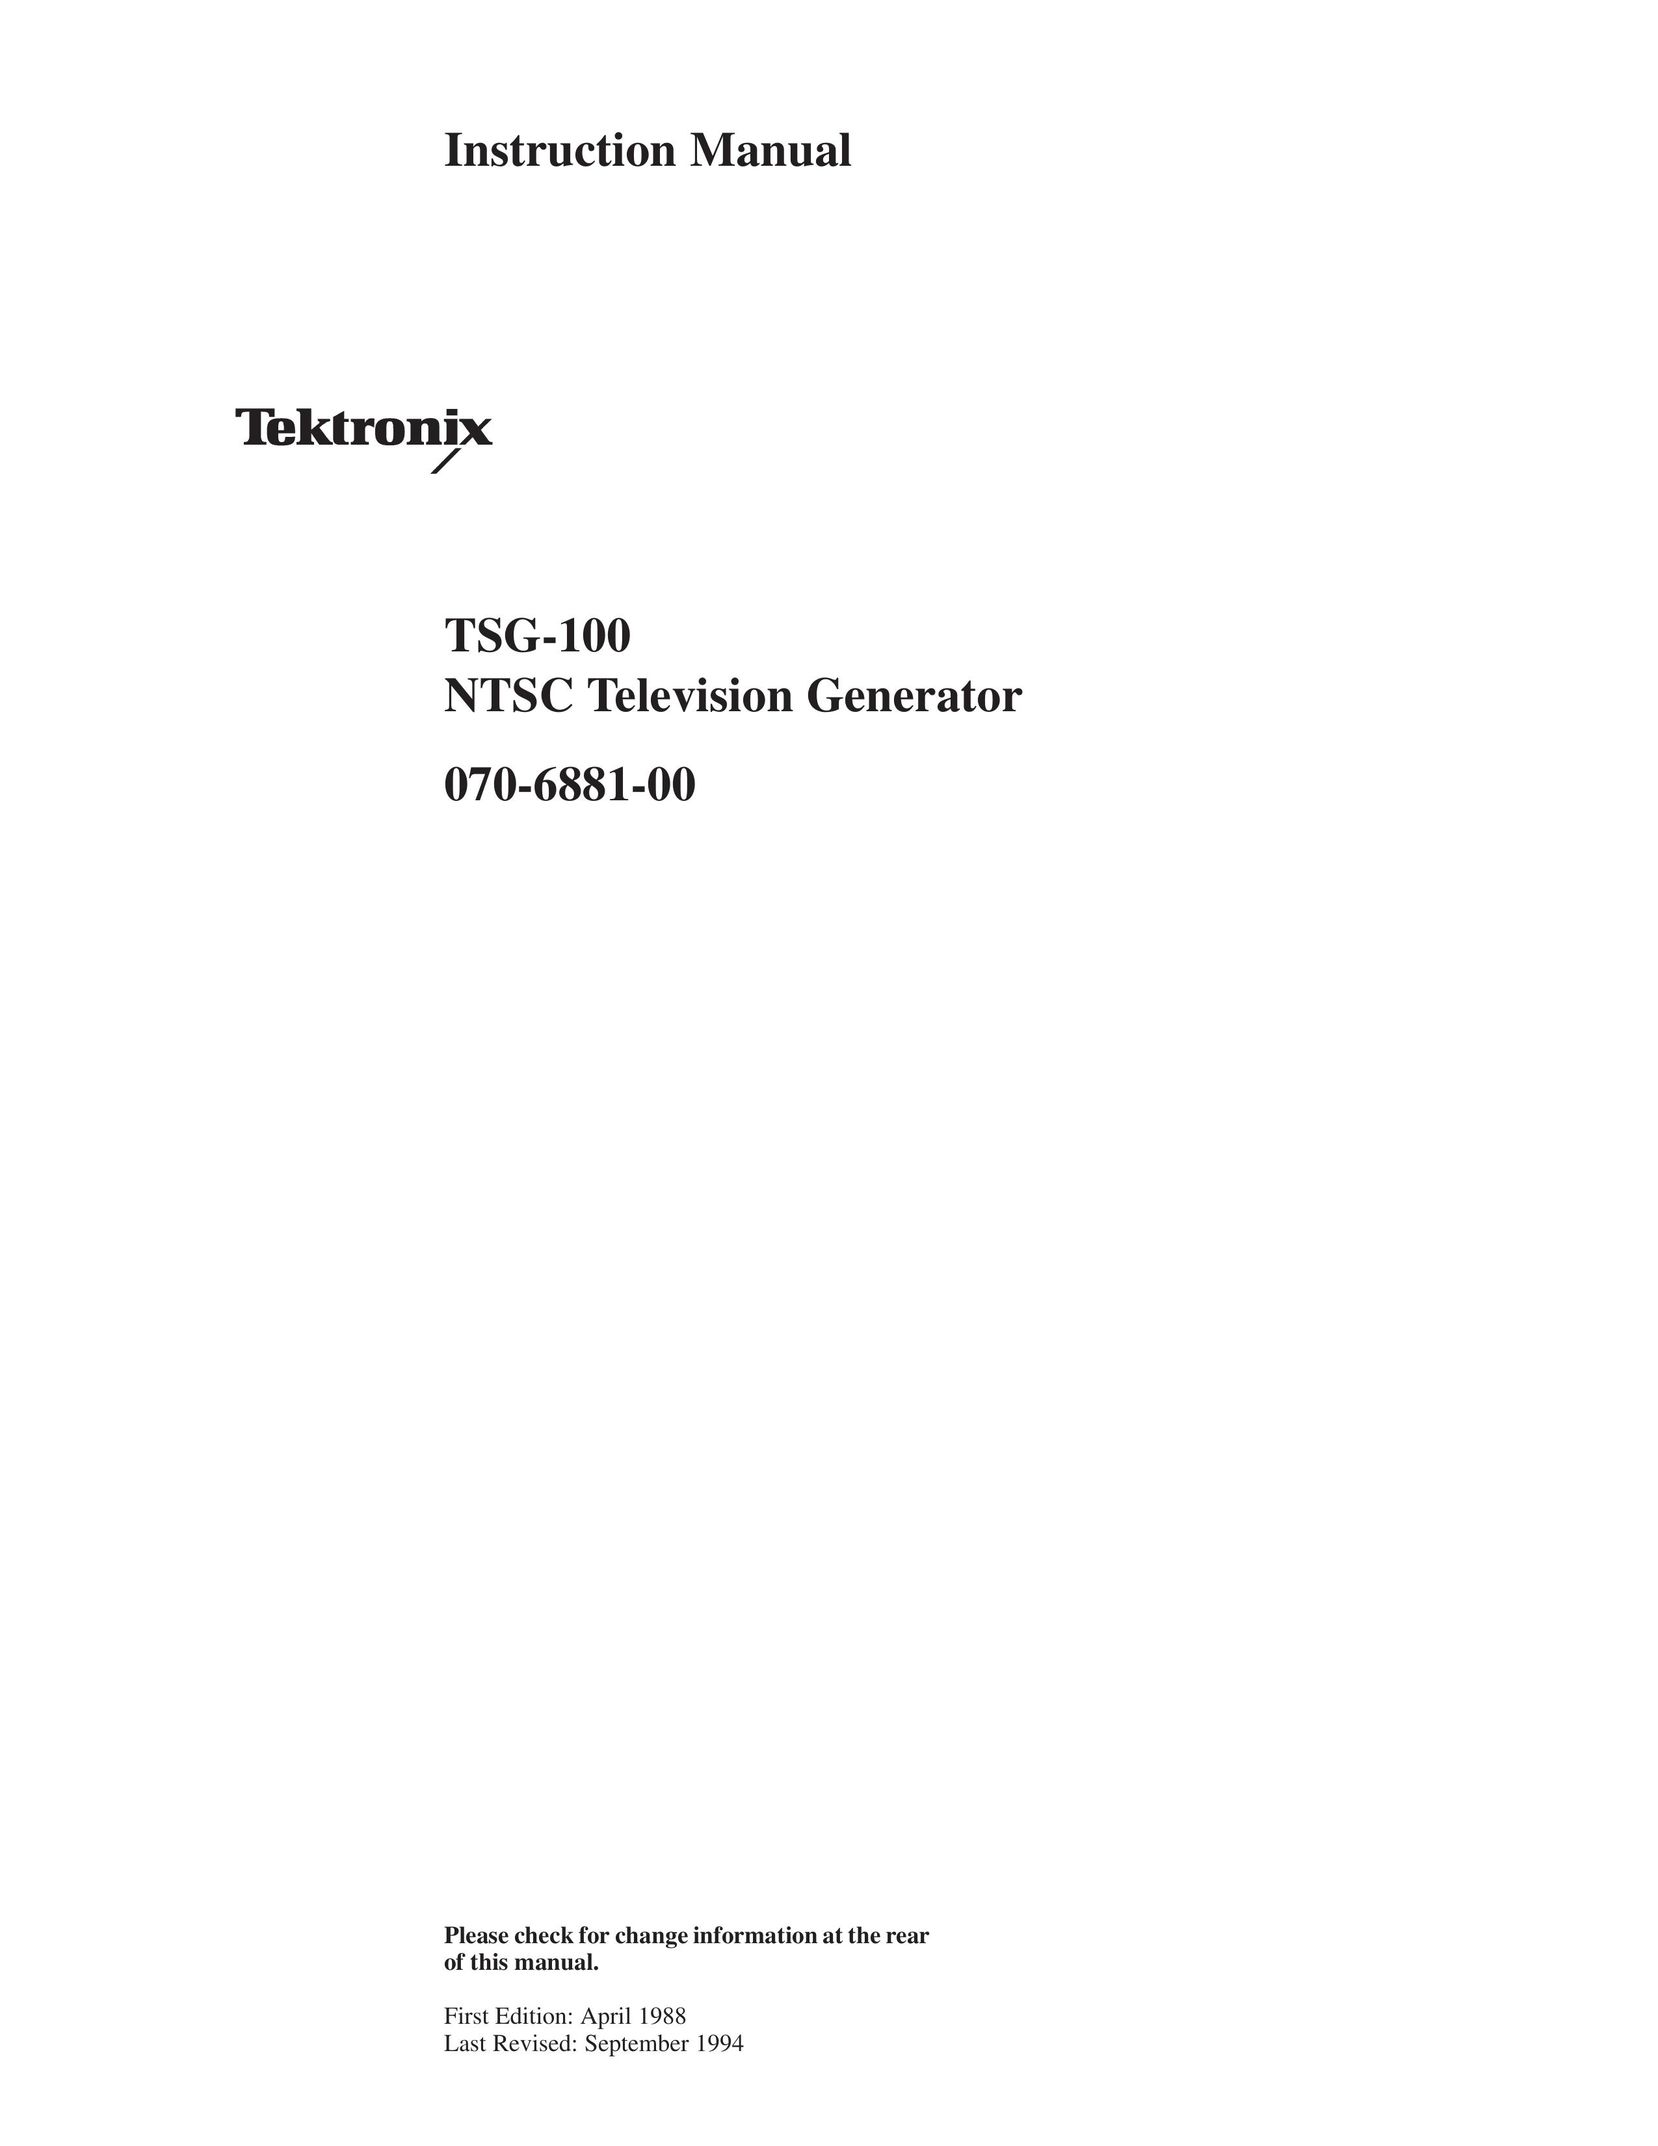 Tektronix TSG-100 Car Satellite TV System User Manual